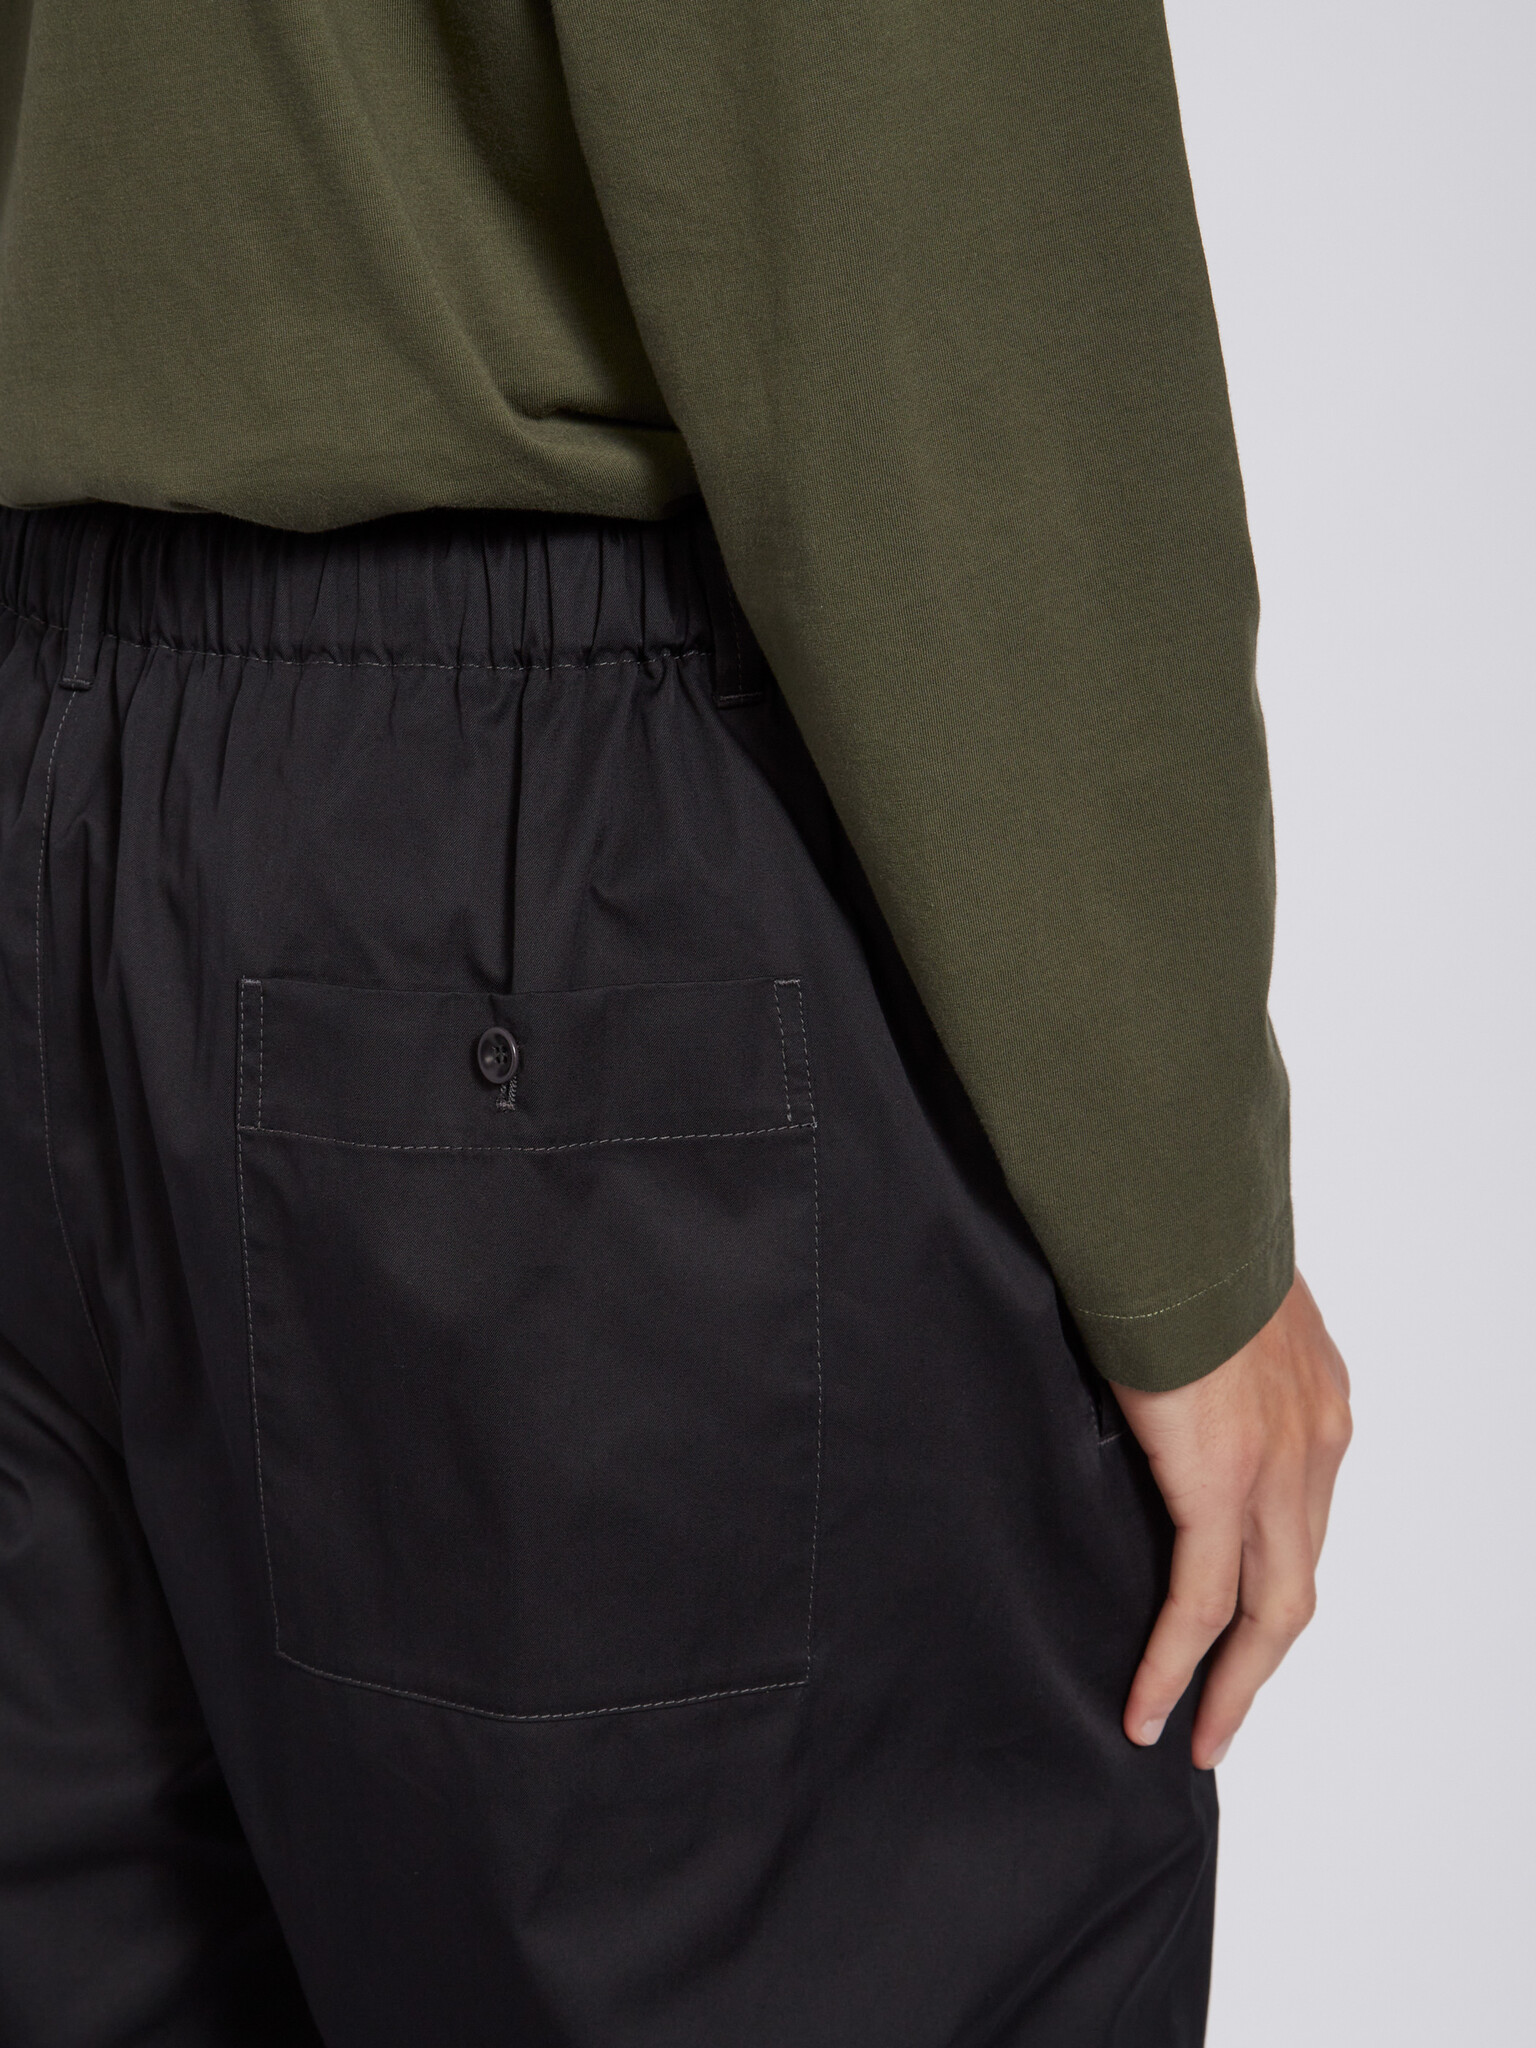 Lemaire: Black Relaxed Pants, Men's Designer Clothes